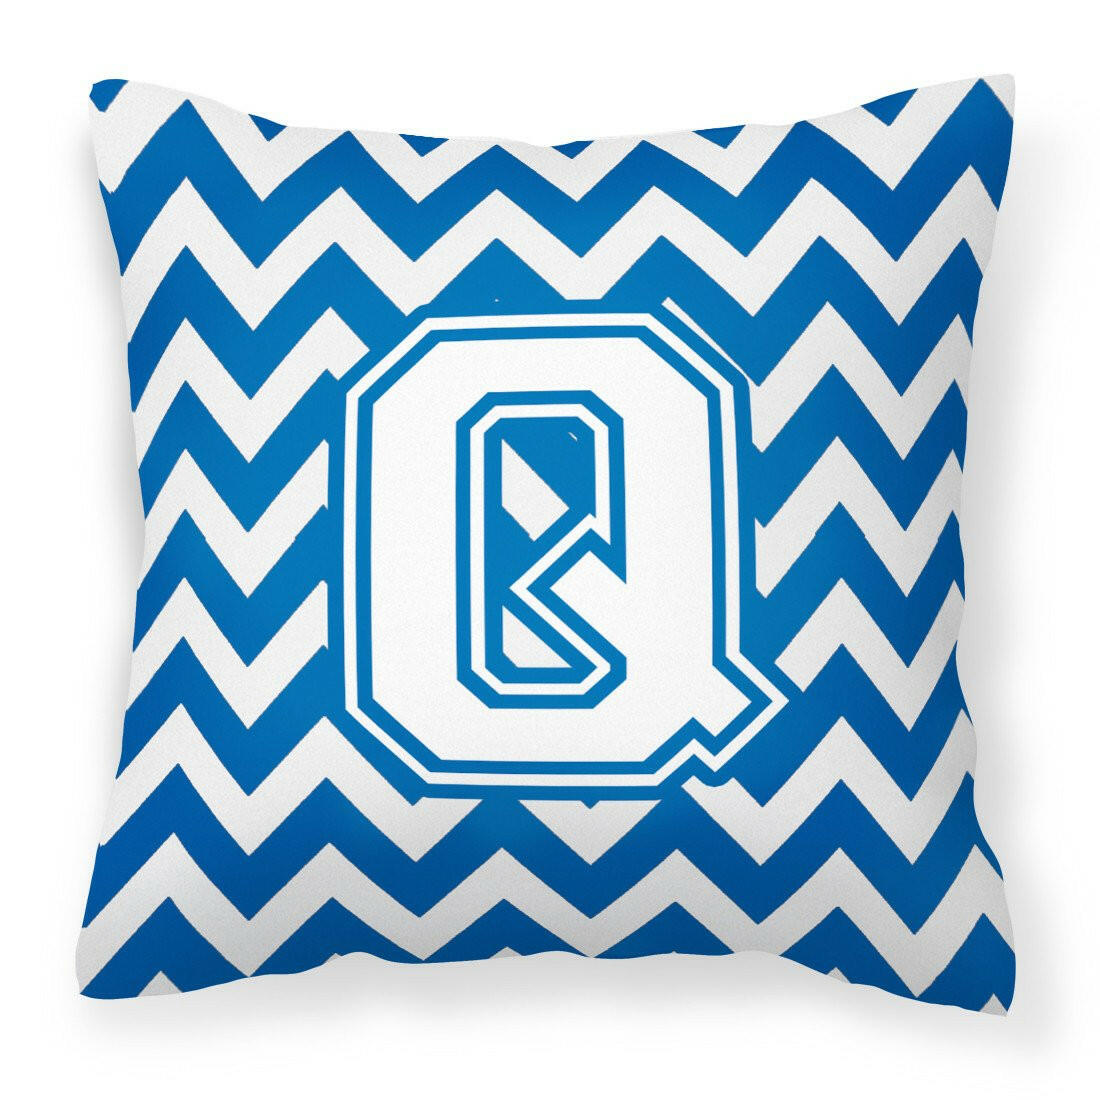 Letter Q Chevron Blue and White Fabric Decorative Pillow CJ1045-QPW1414 by Caroline's Treasures